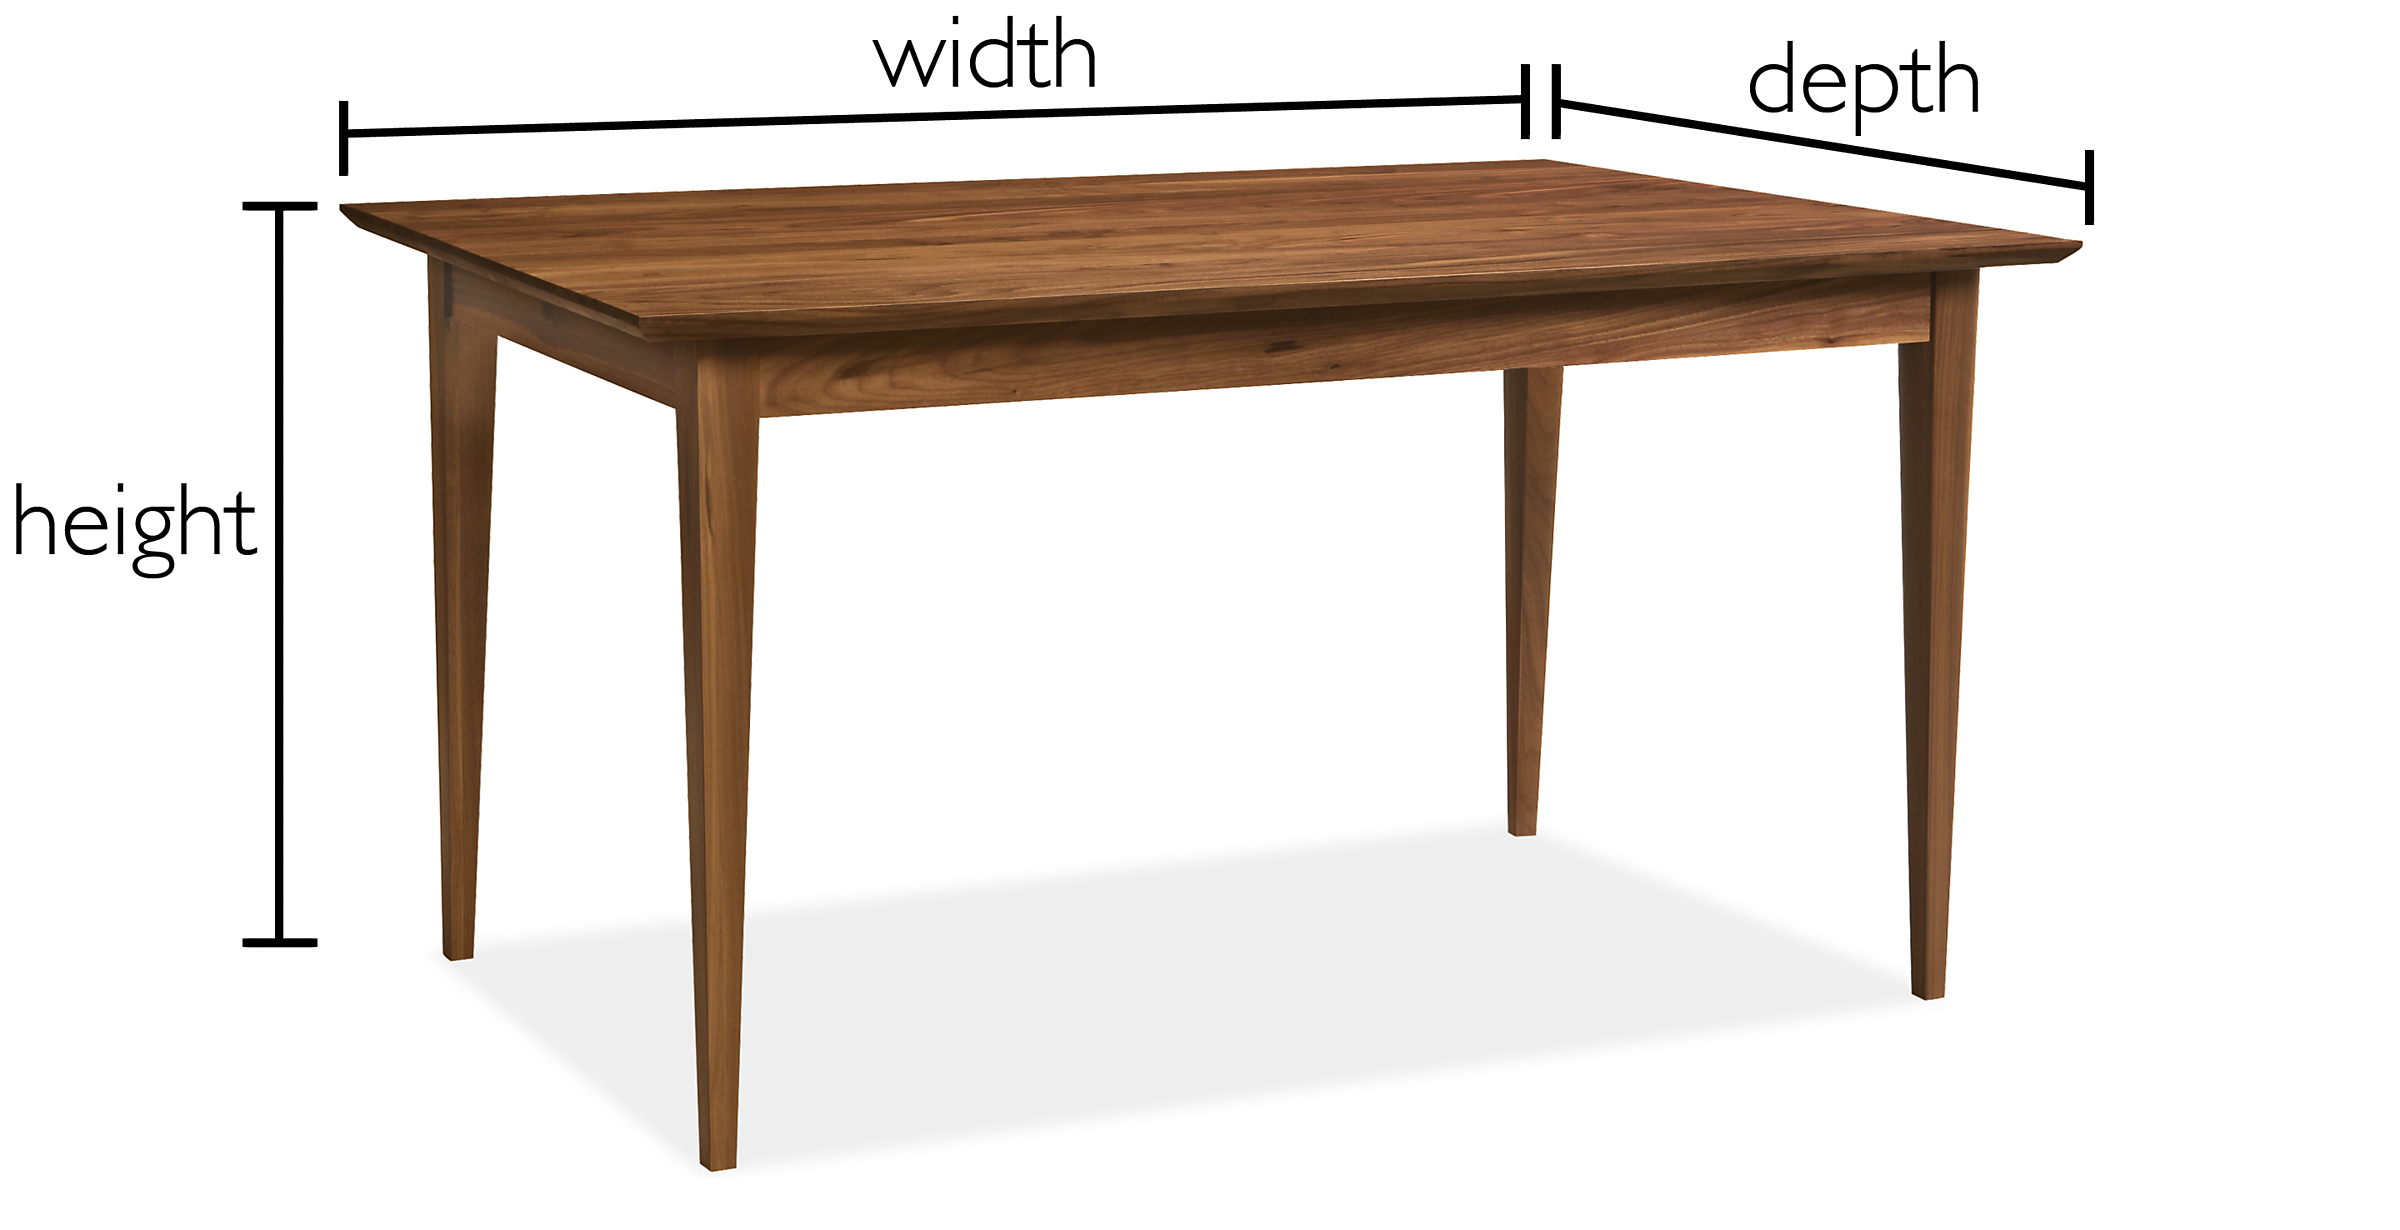 Adams Custom Table